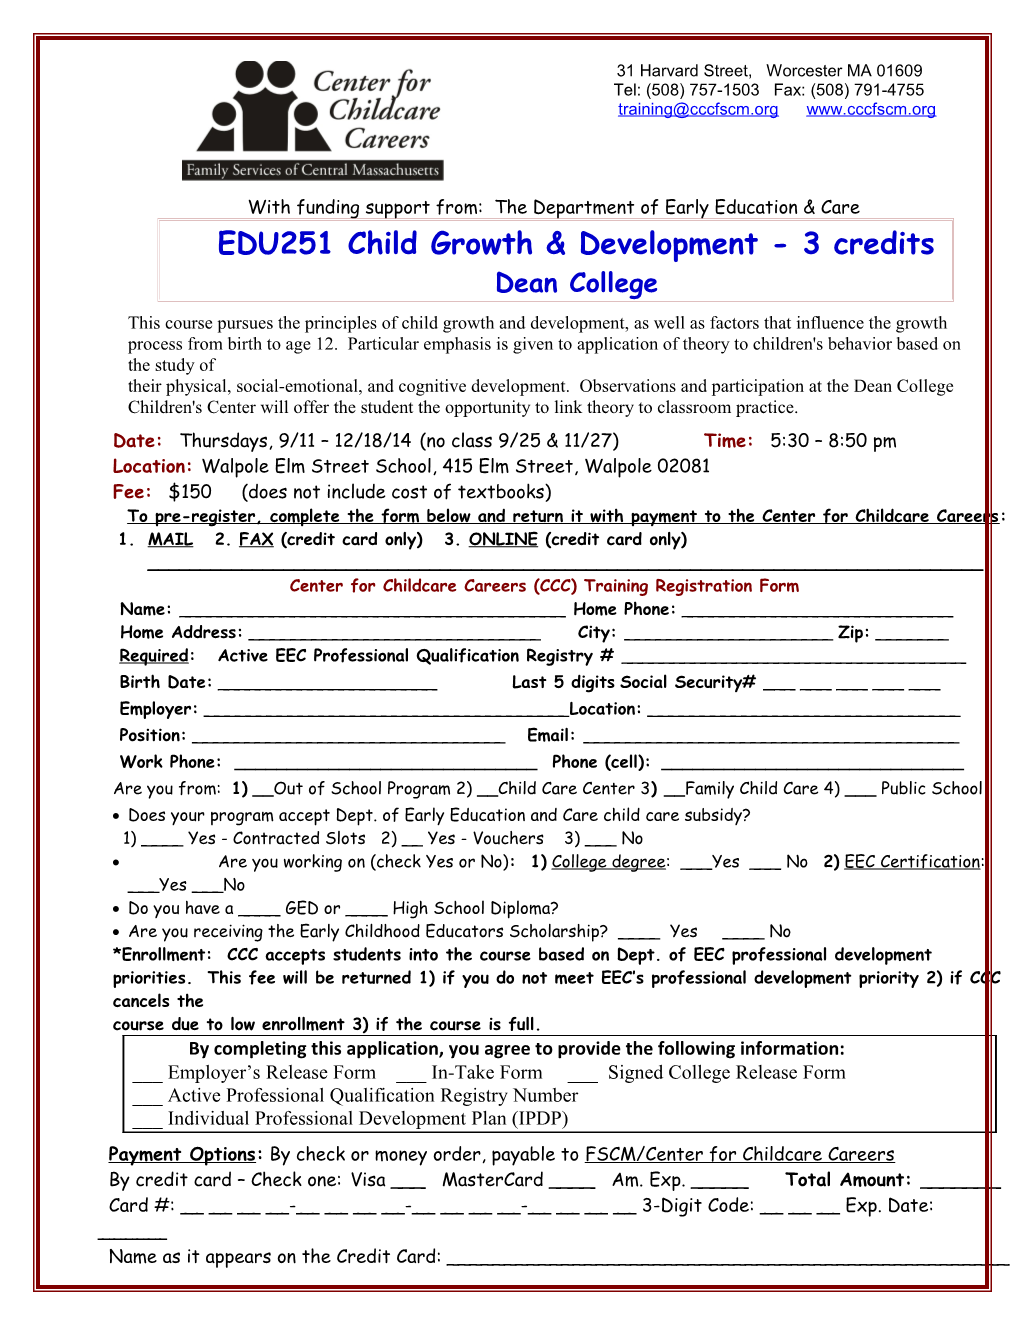 EDU251 Child Growth & Development - 3 Credits